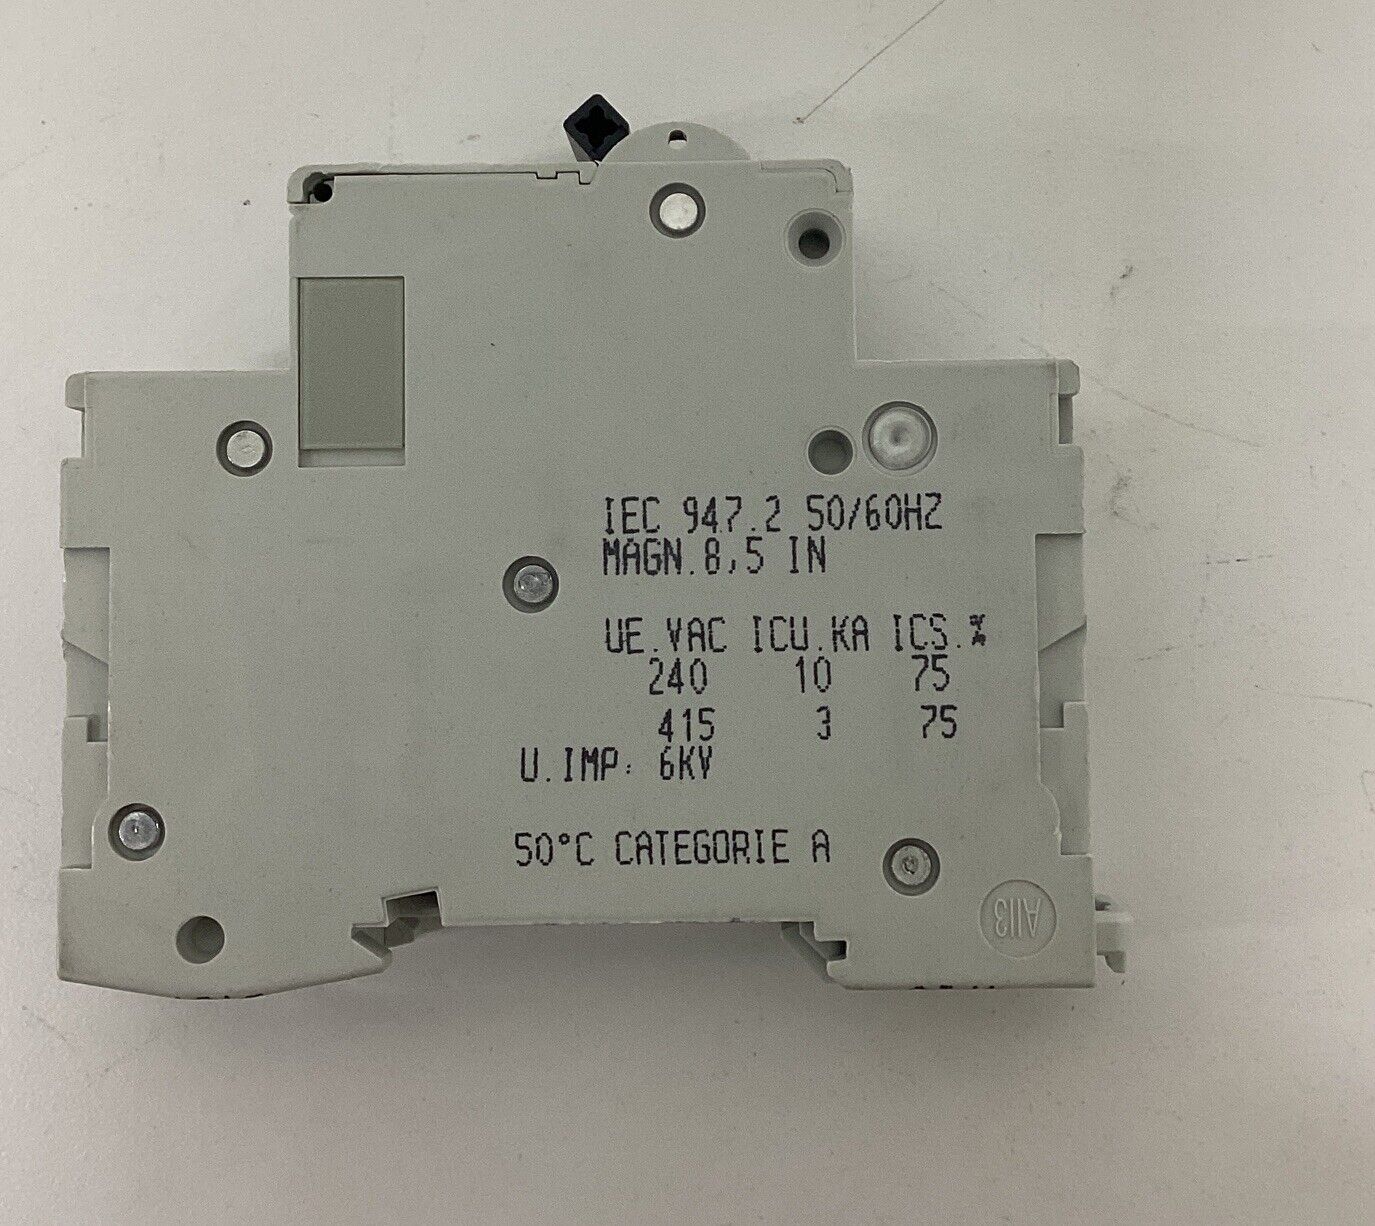 Schneider C60N-C13 Multi 9 13-Amp, 1-Pole Circuit Breaker (BK160)